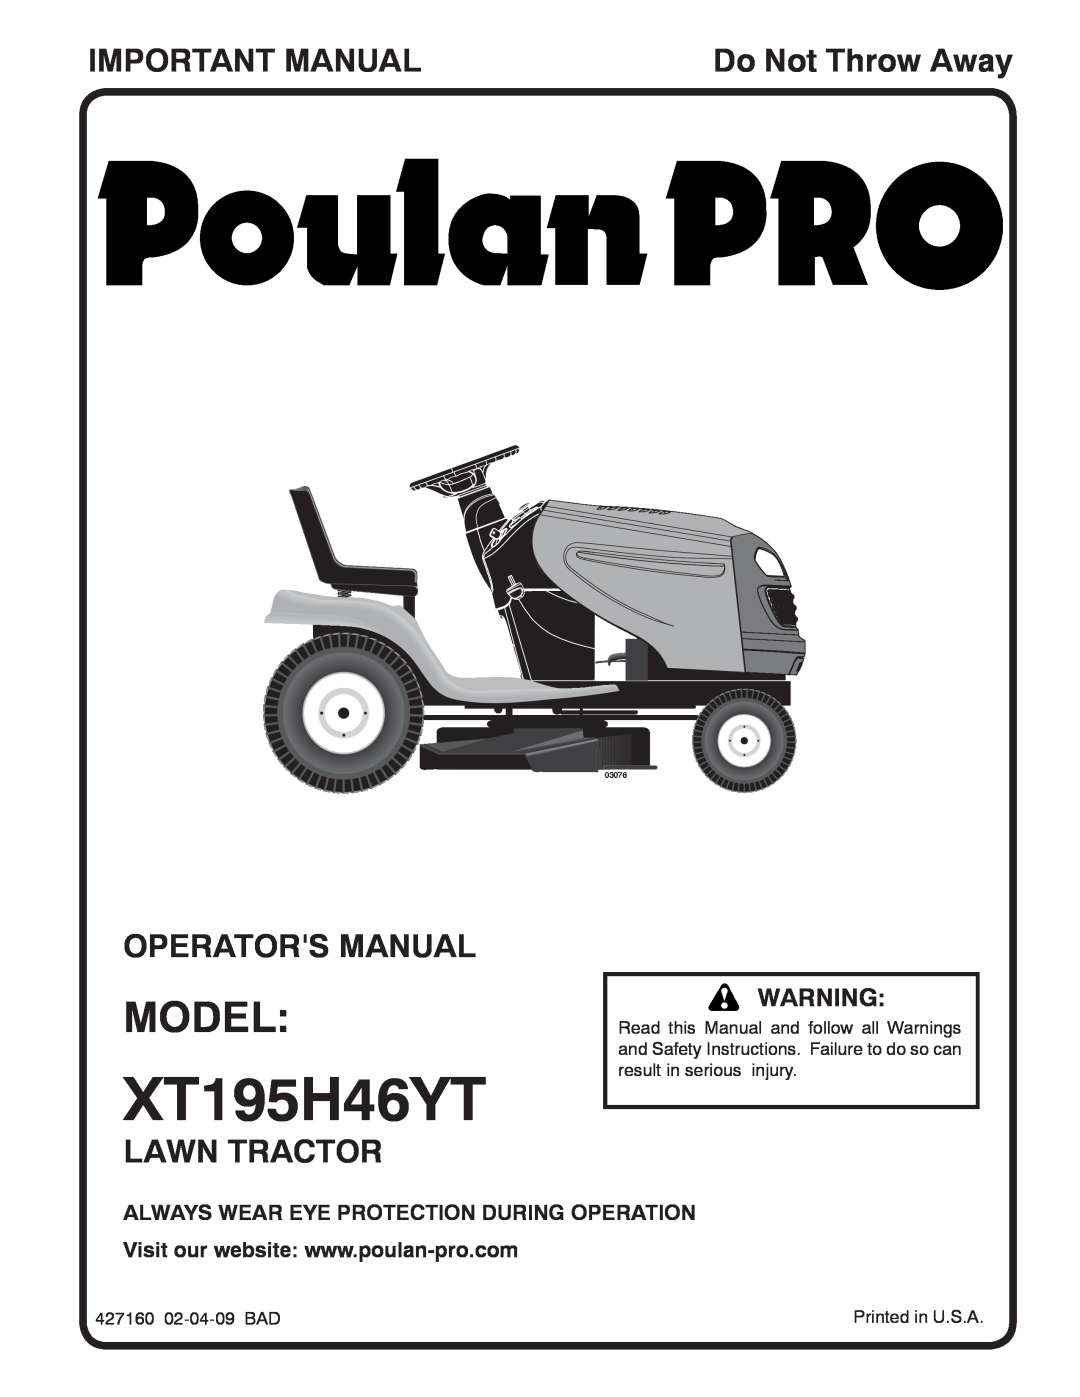 Poulan XT195H46YT manual Model, Important Manual, Operators Manual, Lawn Tractor, Do Not Throw Away, 03076 